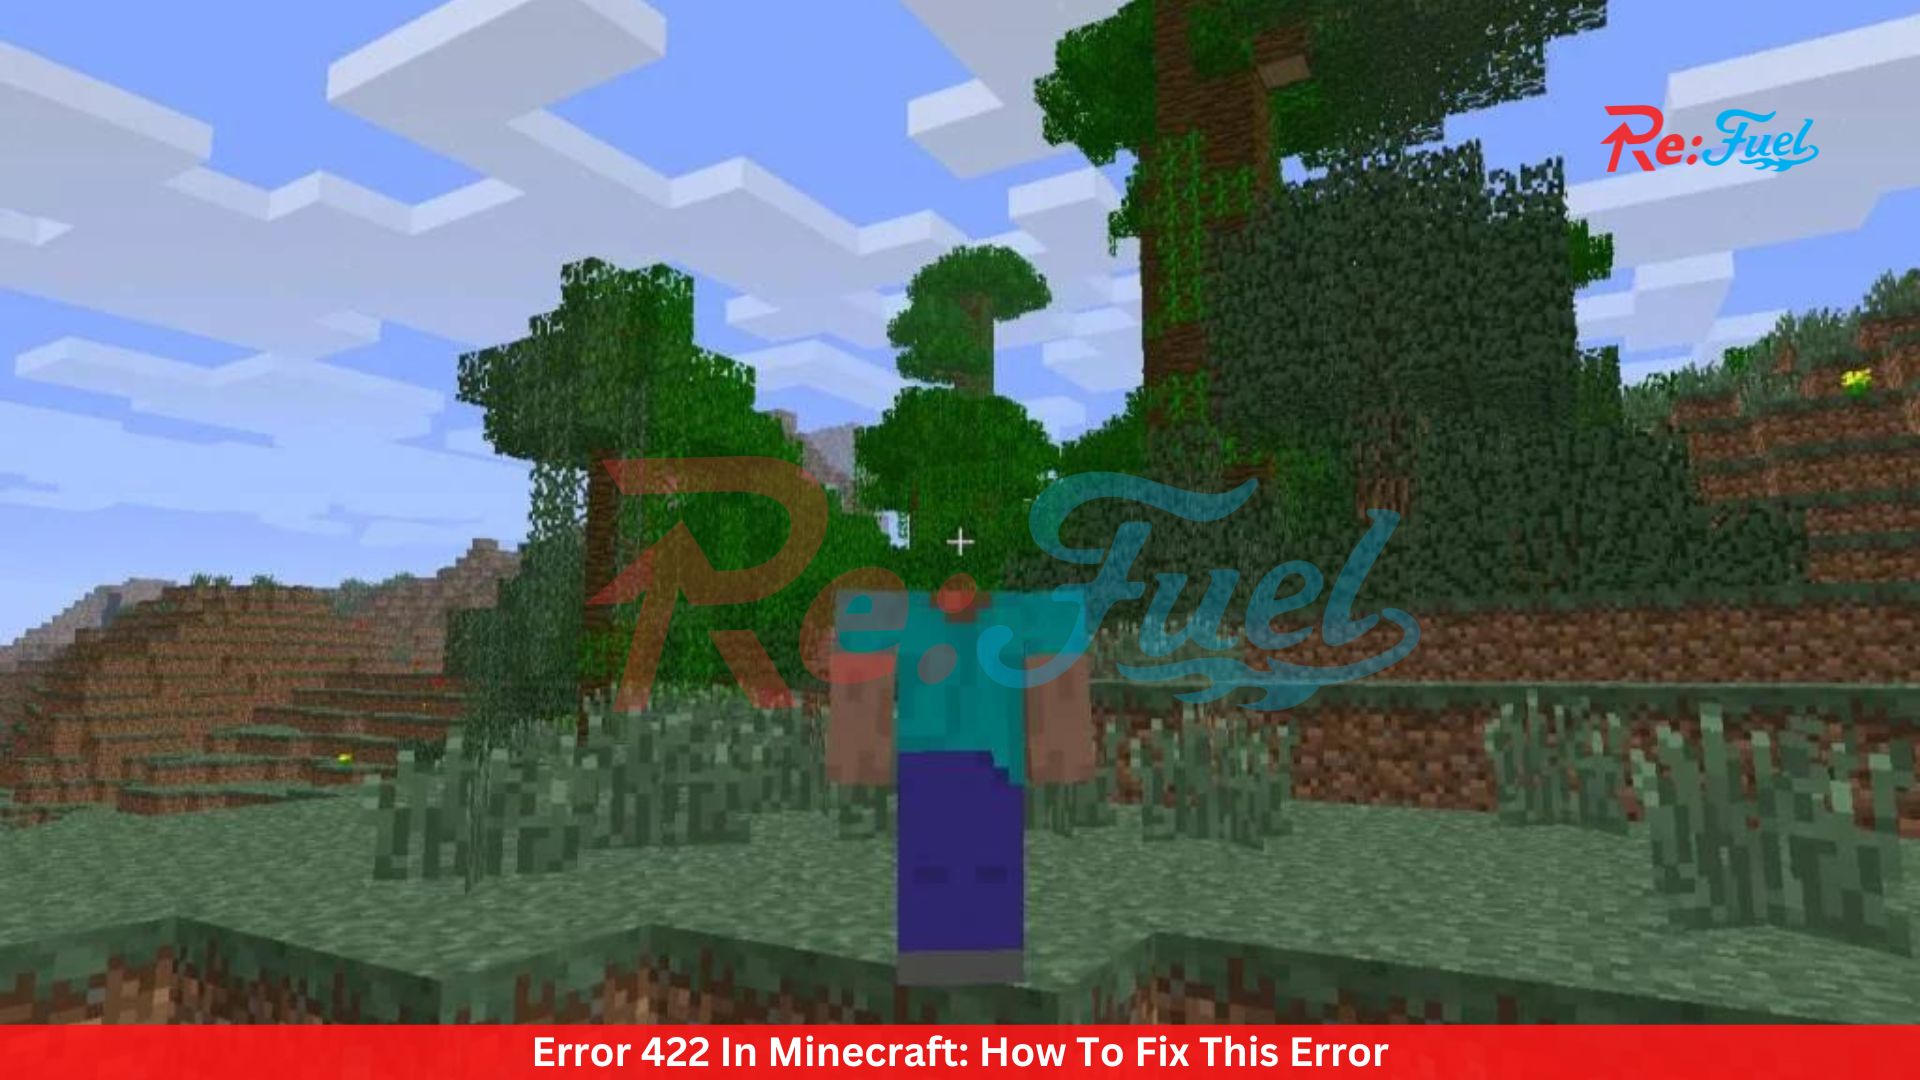 Error 422 In Minecraft: How To Fix This Error